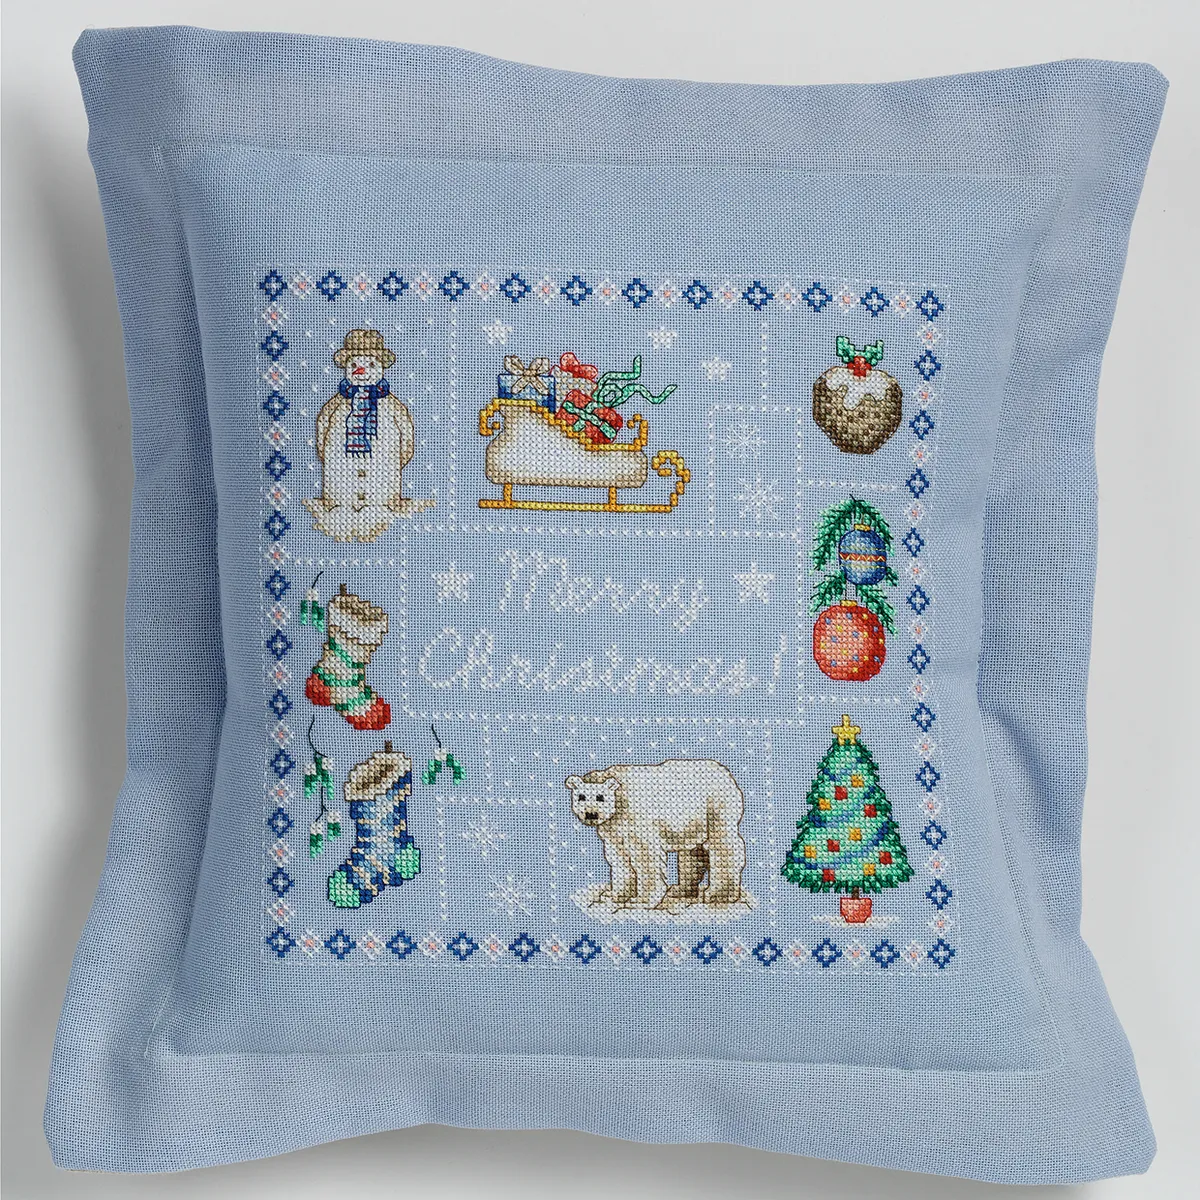 Christmas cross stitch sampler cushion square